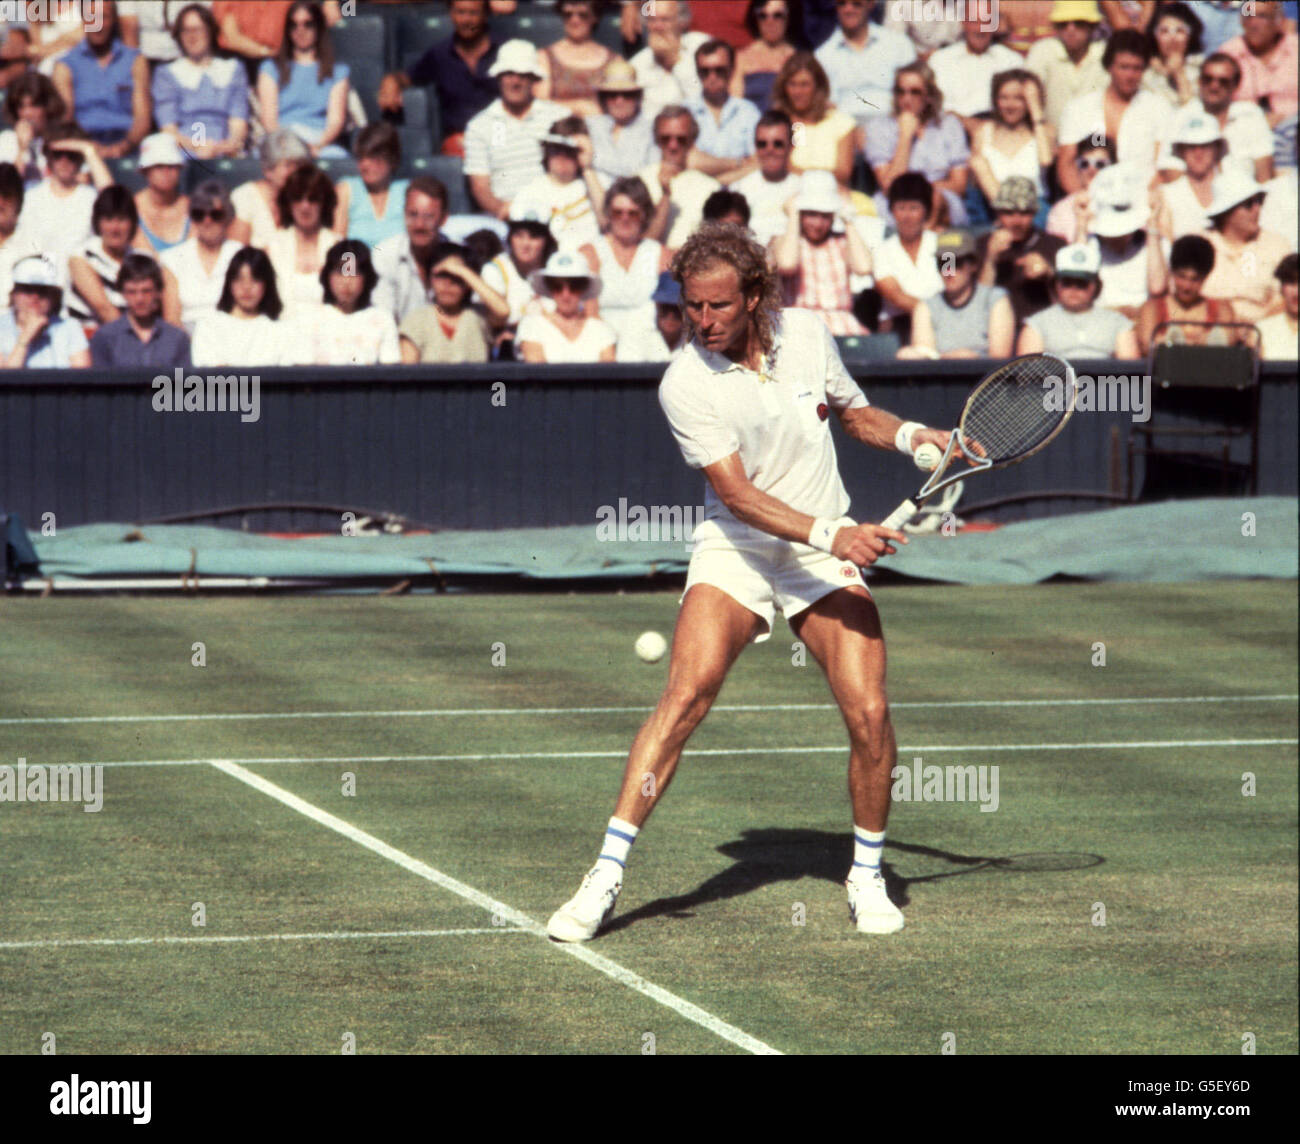 Vitas gerulaitis tennis action hi-res stock photography and images - Alamy